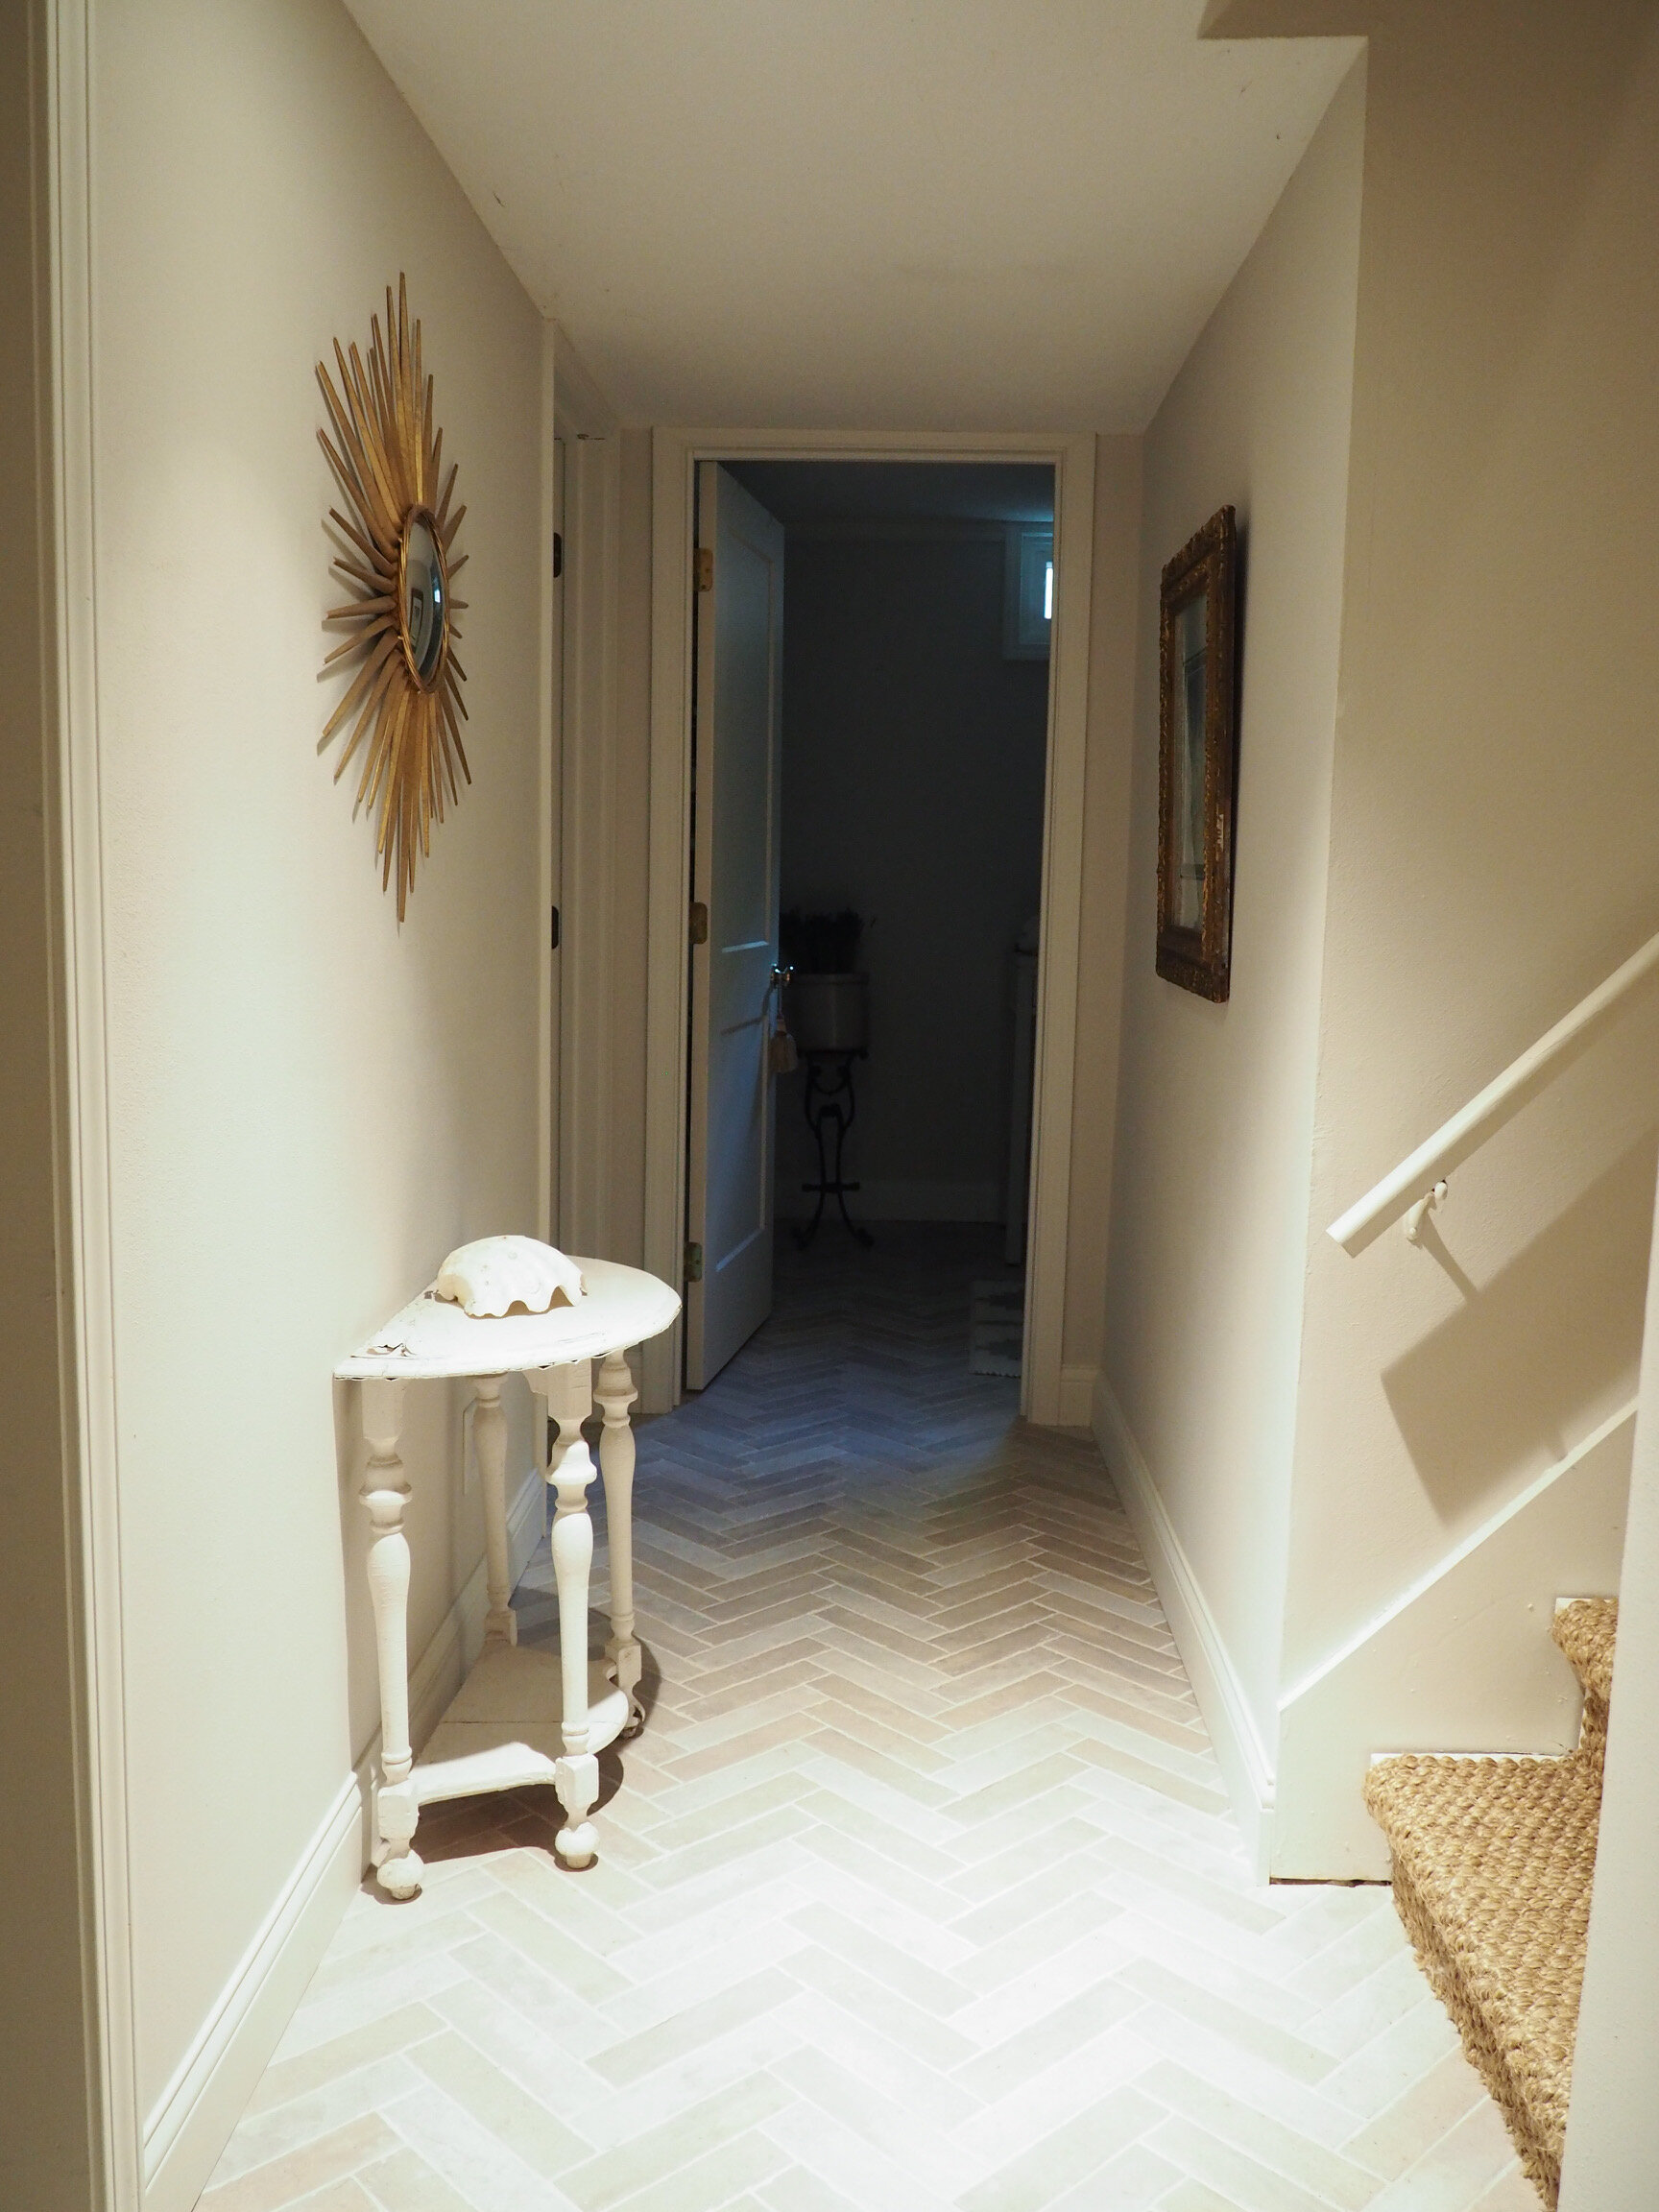 Basement hallway to craft room